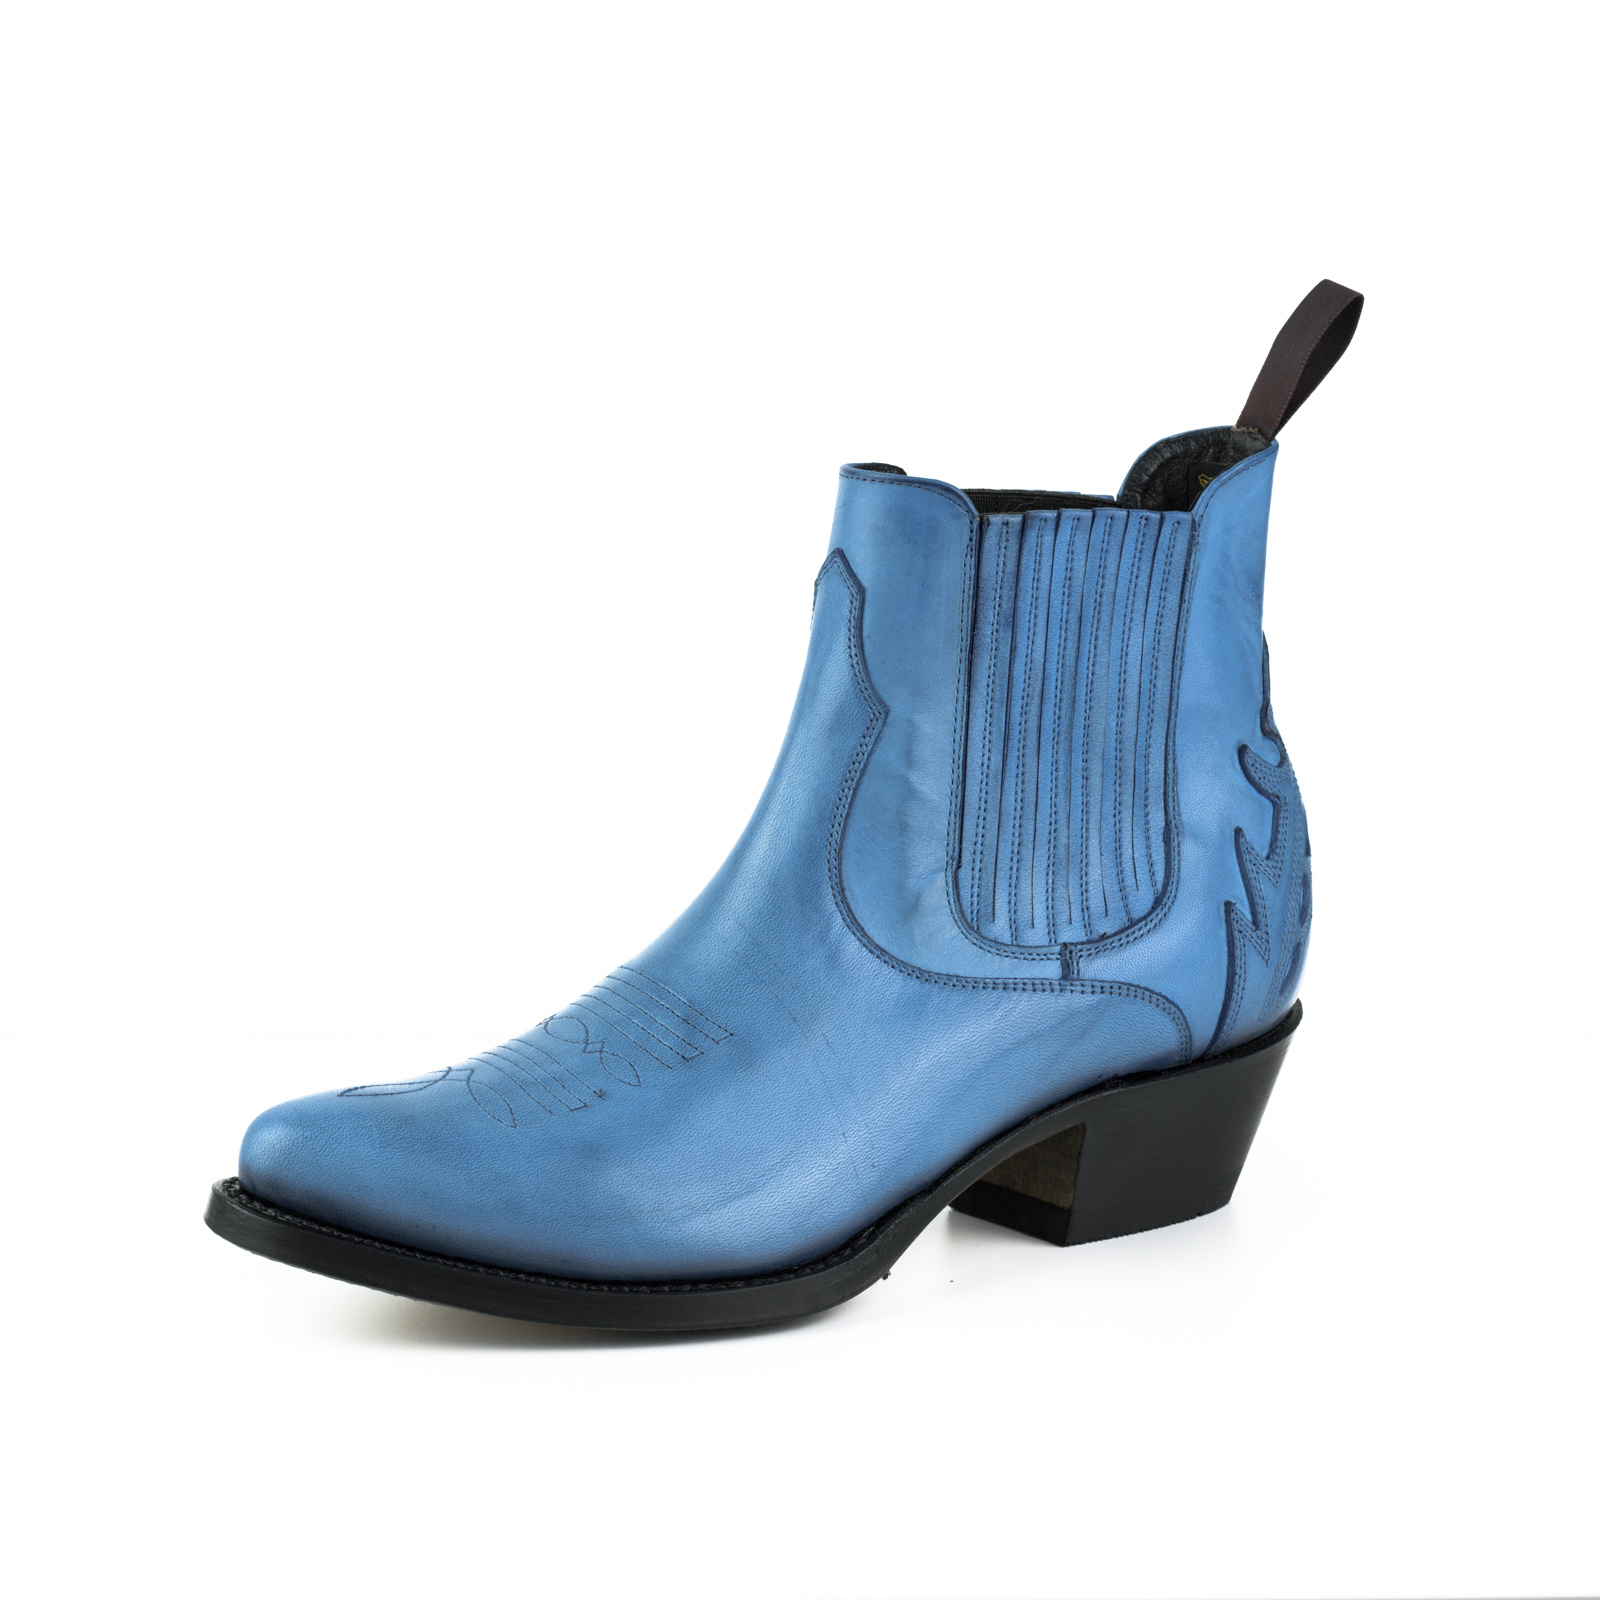 mayura-boots-modelo-marilyn-2487-azul3-1